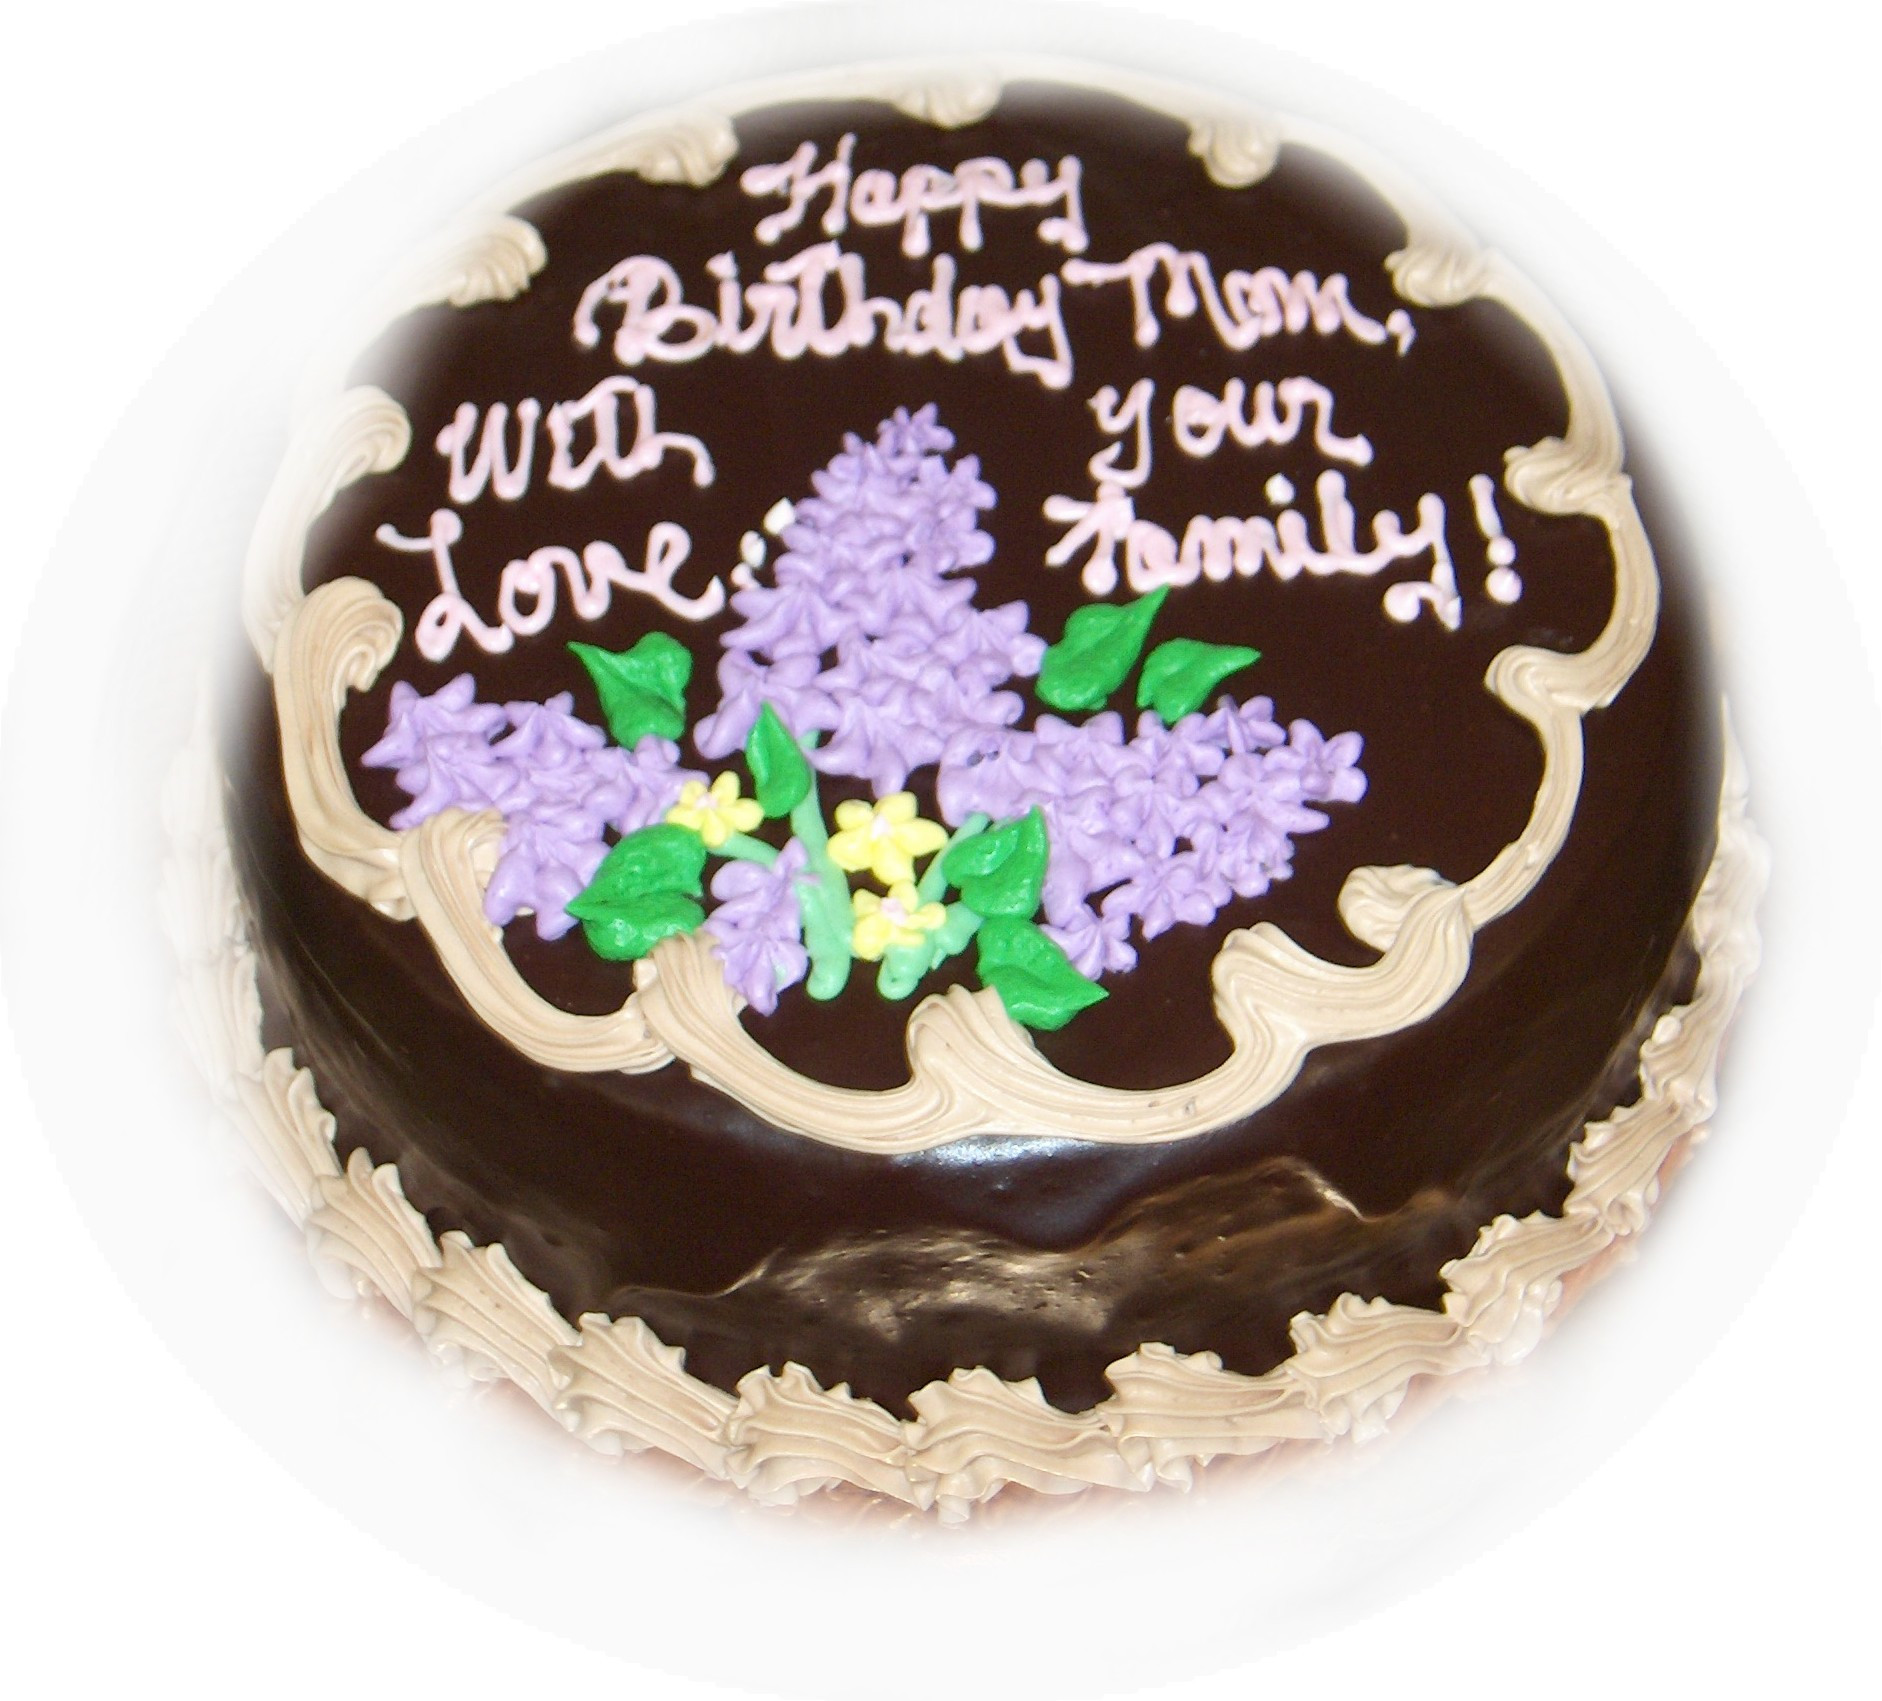 Gourmet Birthday Cakes
 Gourmet Touch Bakery Gallery Specialty Birthday